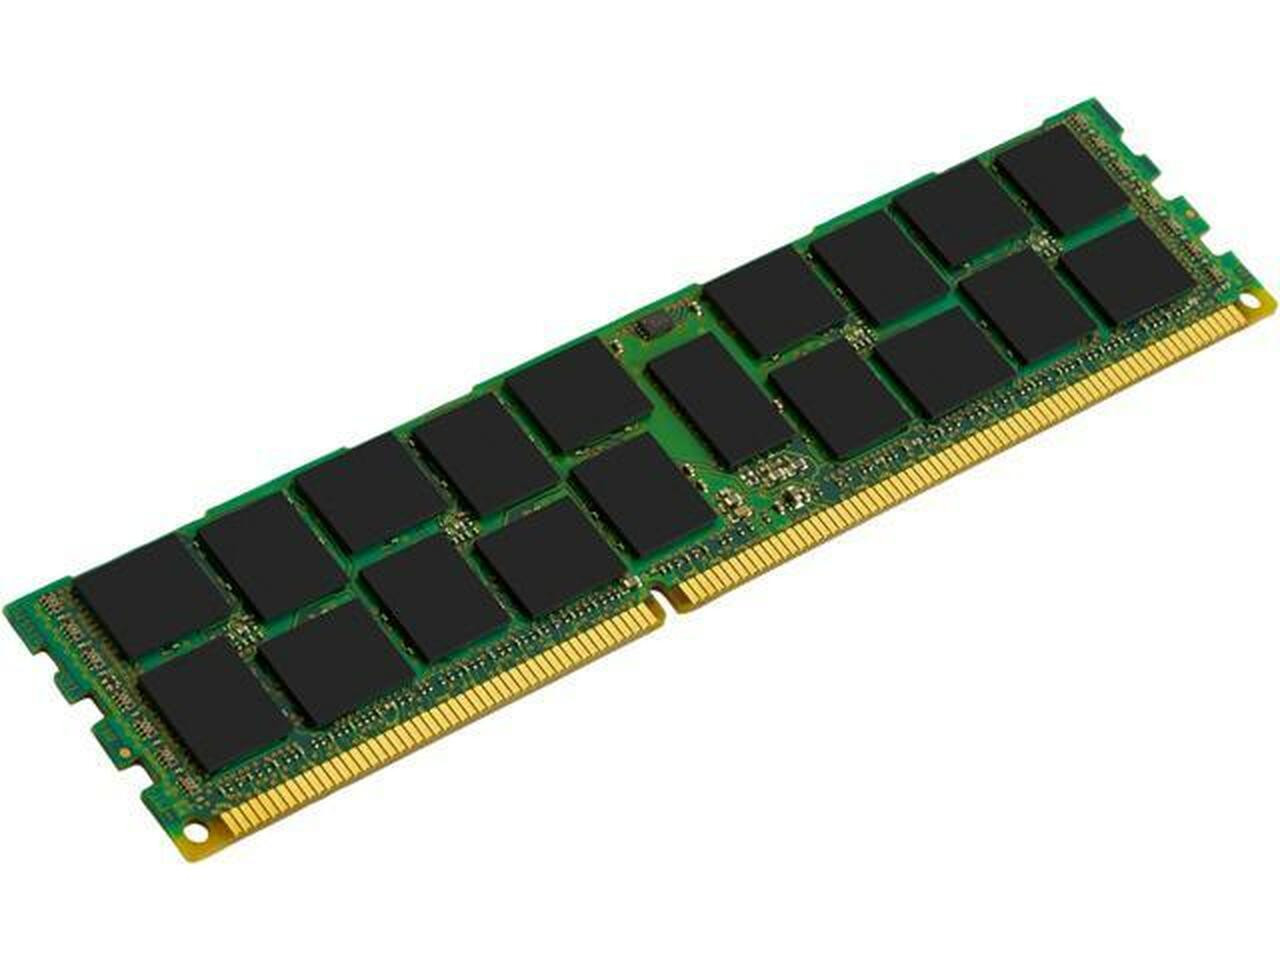 Netpatibles 64GB DDR4 SDRAM Memory Module - 370-AEVP-NPM